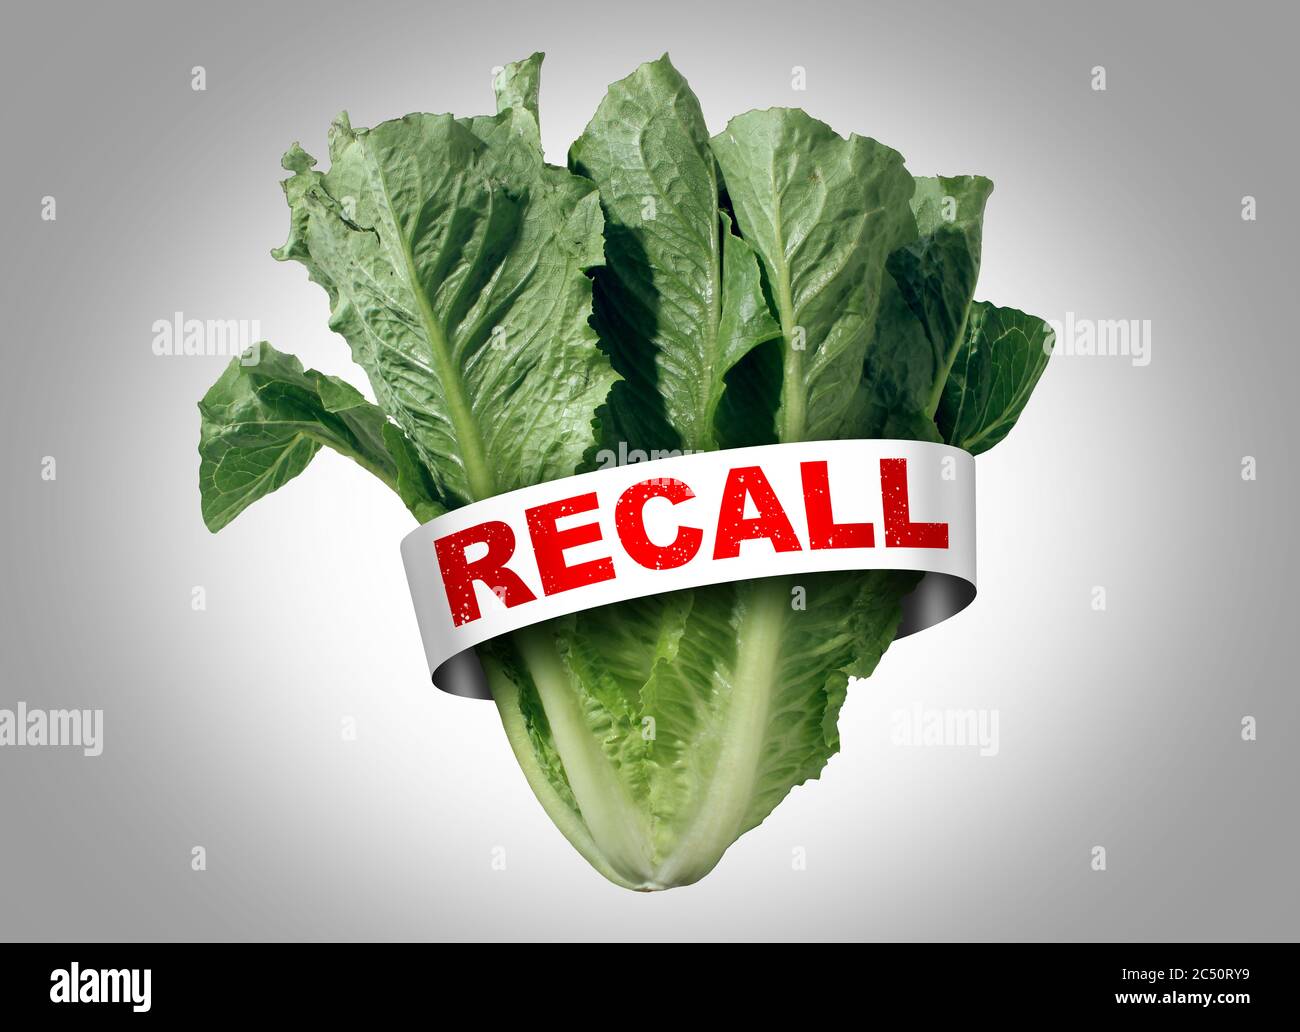 Salad recall as romaine lettuce e coli outbreak food poisoning as a vegetable cyclospora contamination or dangerous bacteria as a public health. Stock Photo